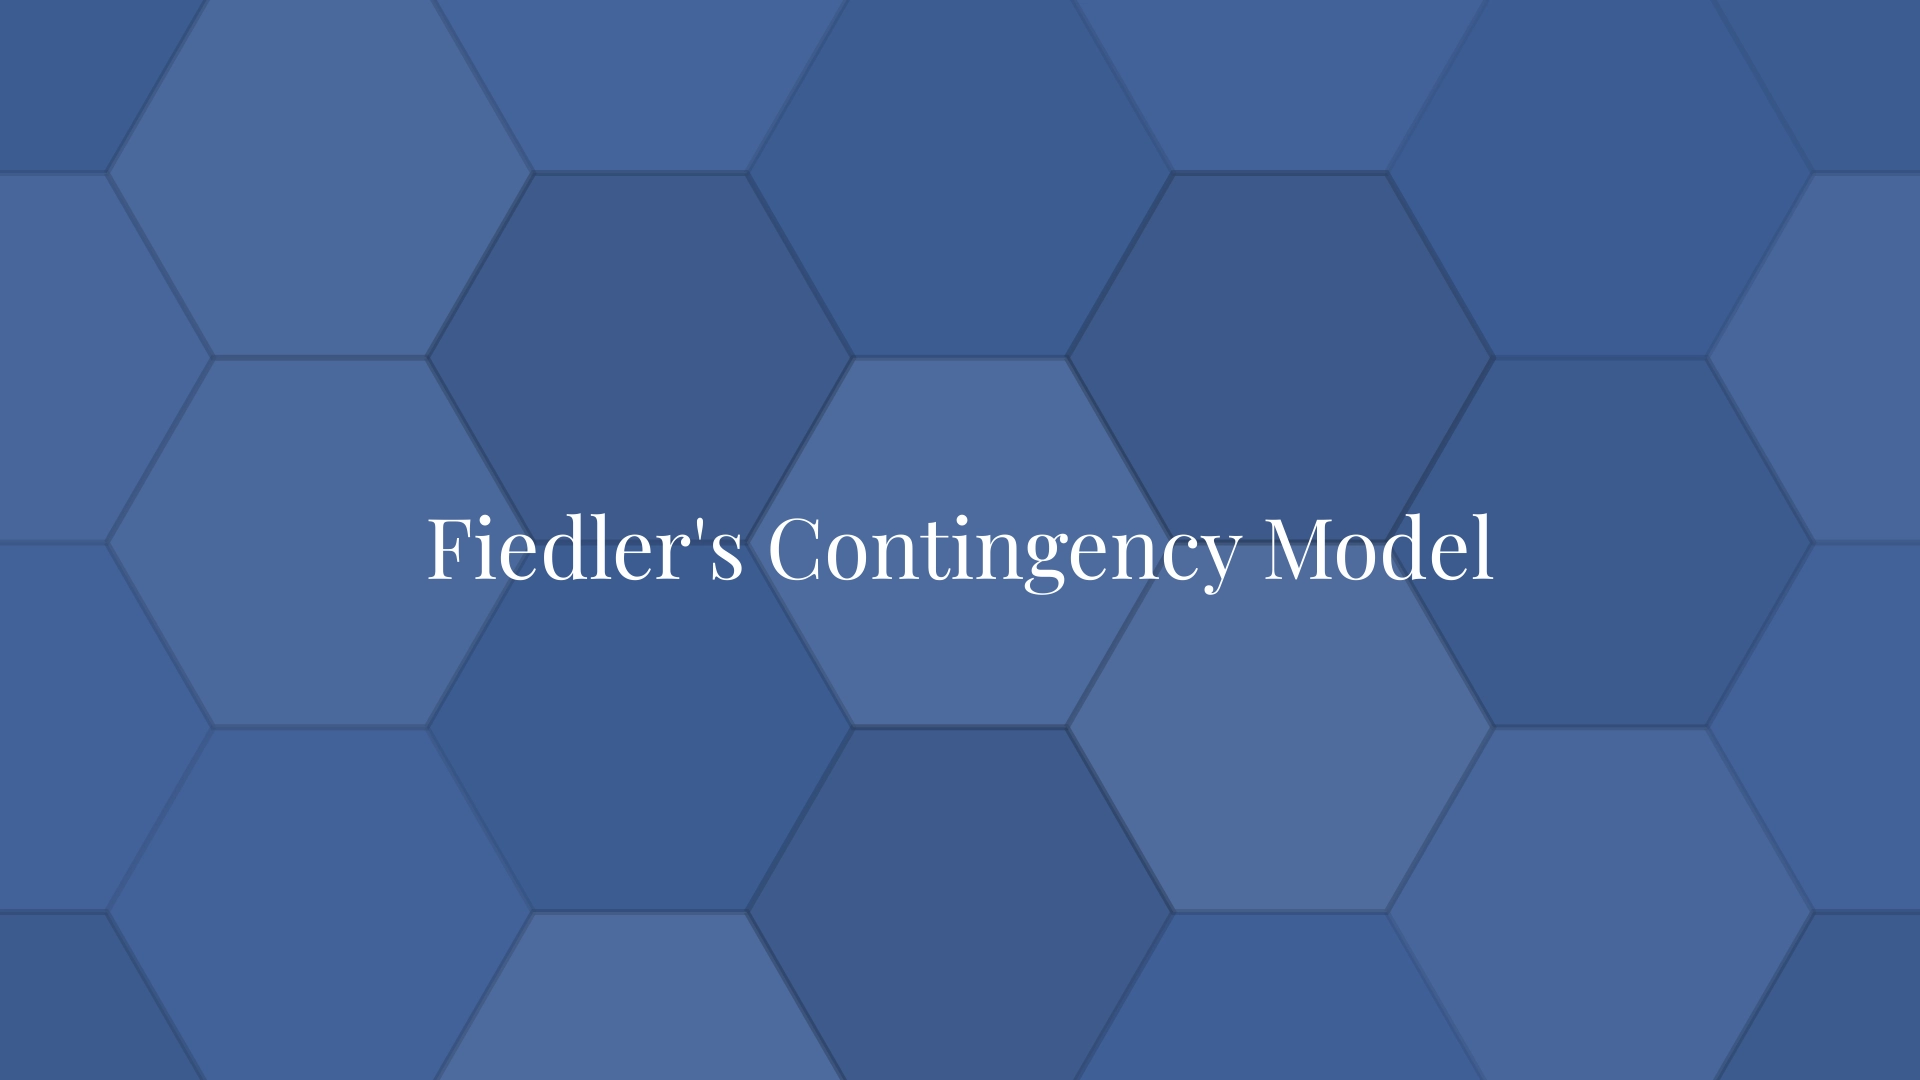 Fiedler's Contingency Model